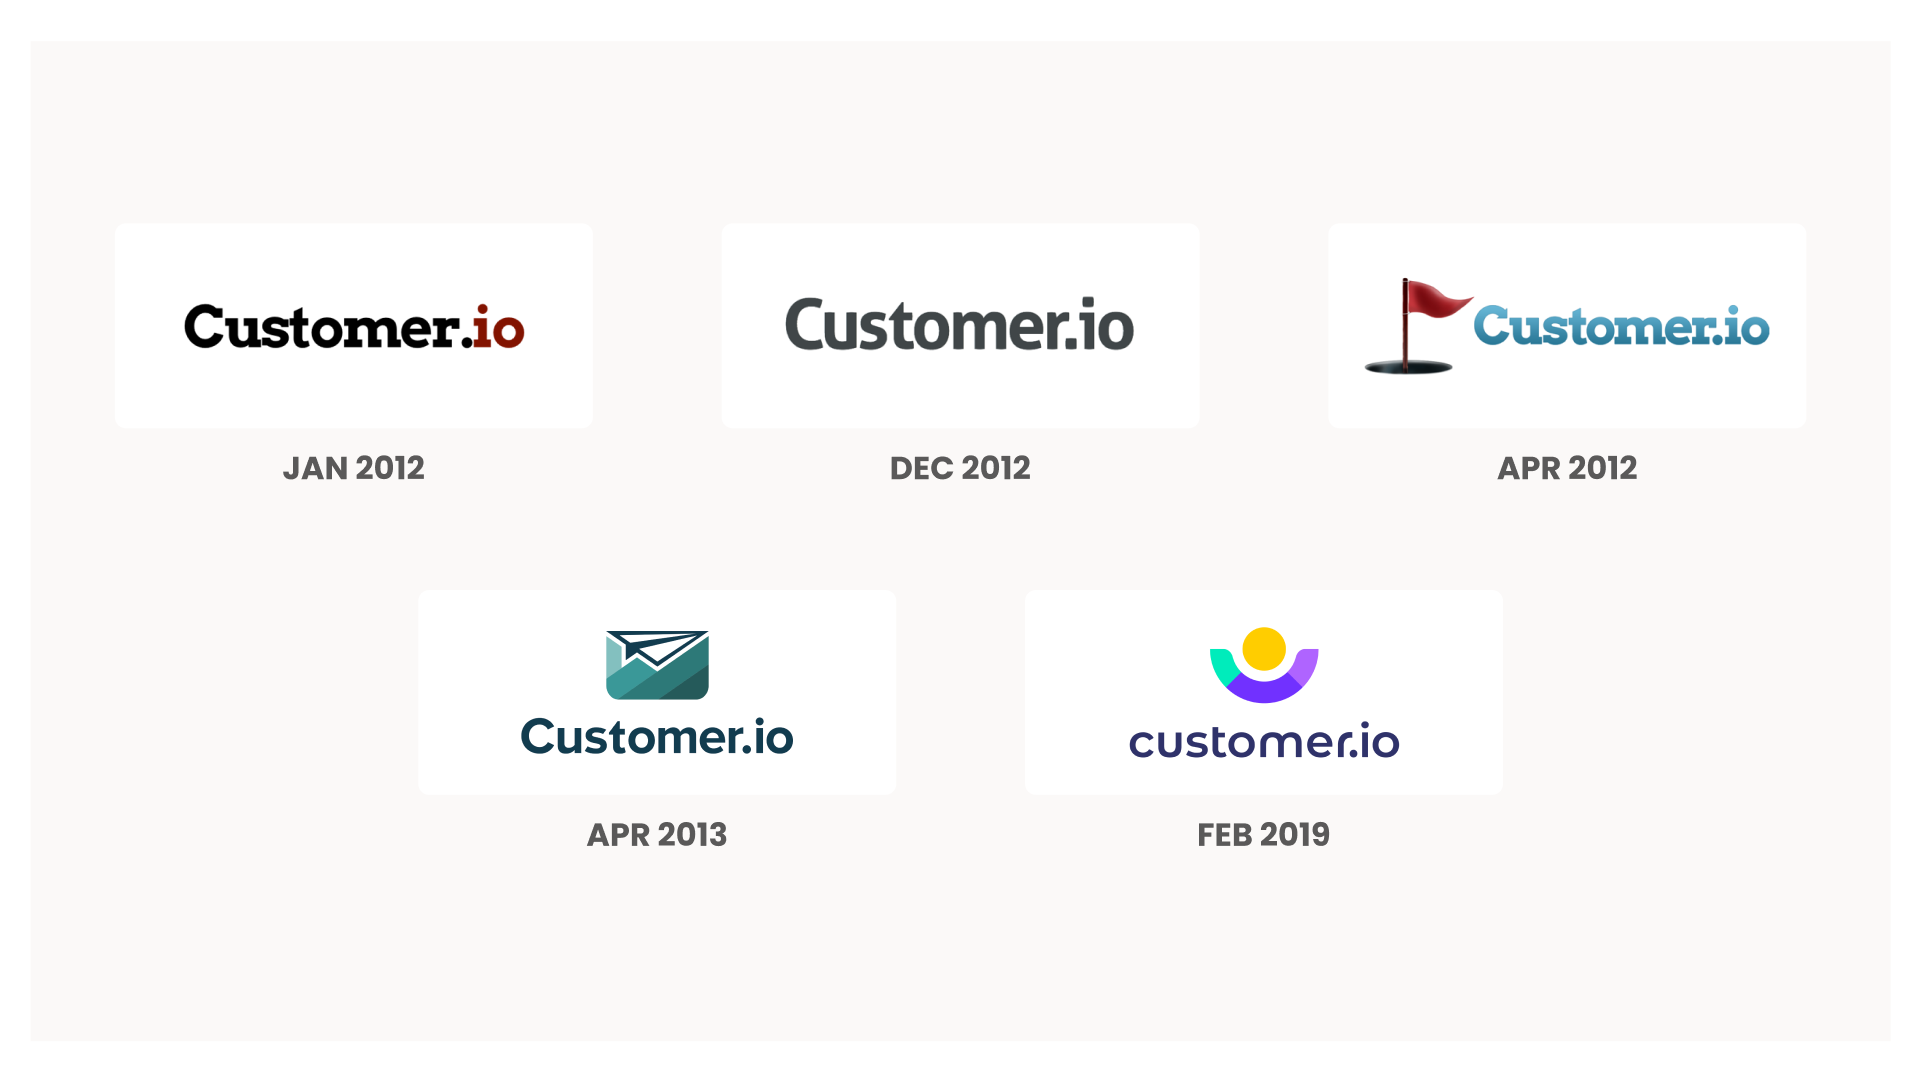 Customer.io logos over the years